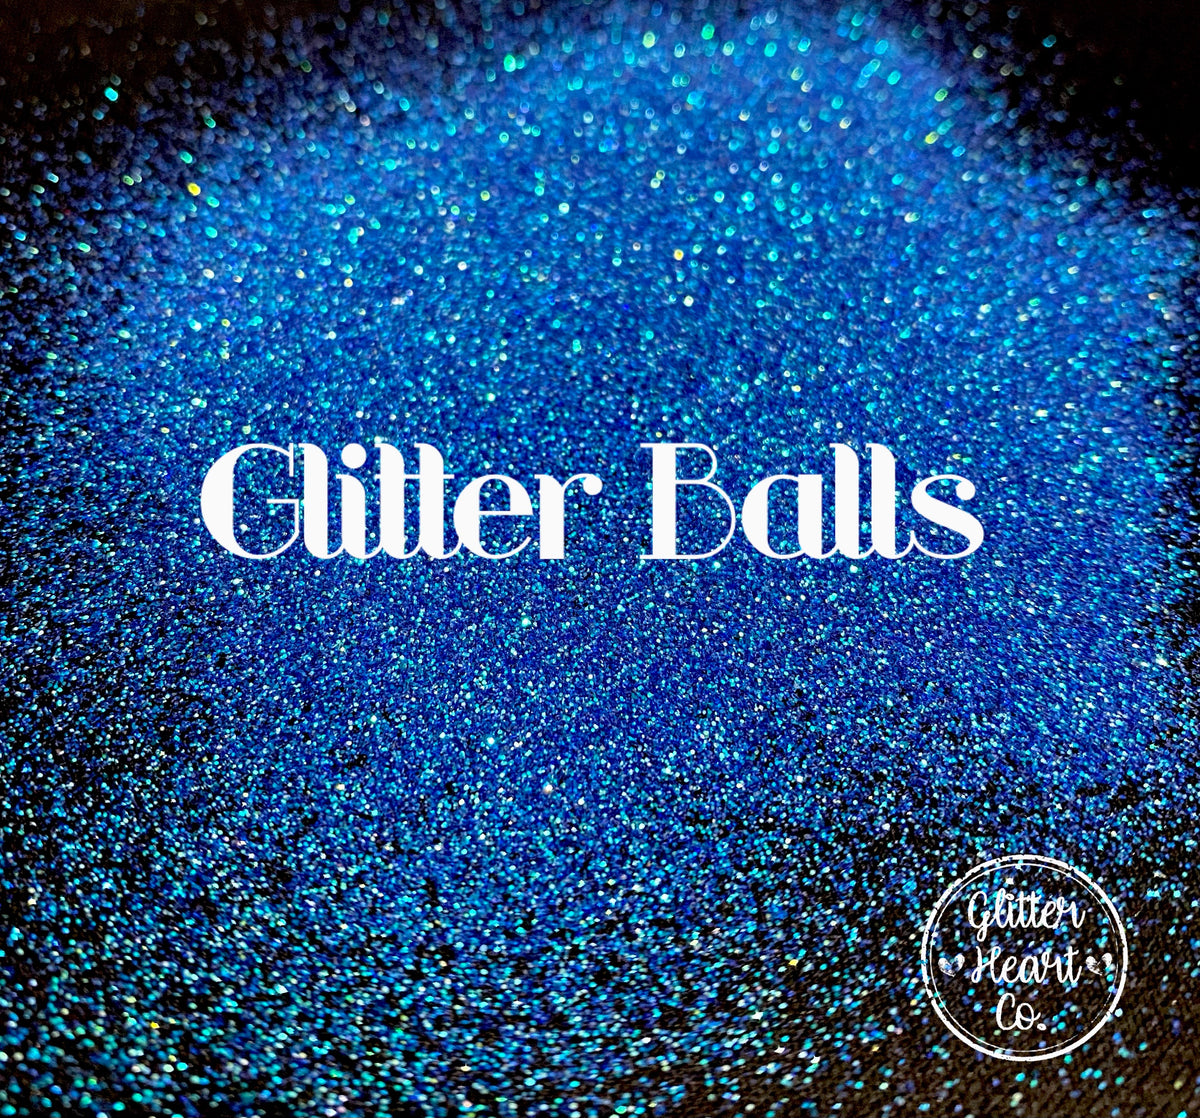 Polyester Glitter - Christmas Bulbs Glitter Shapes by Glitter Heart Co.™